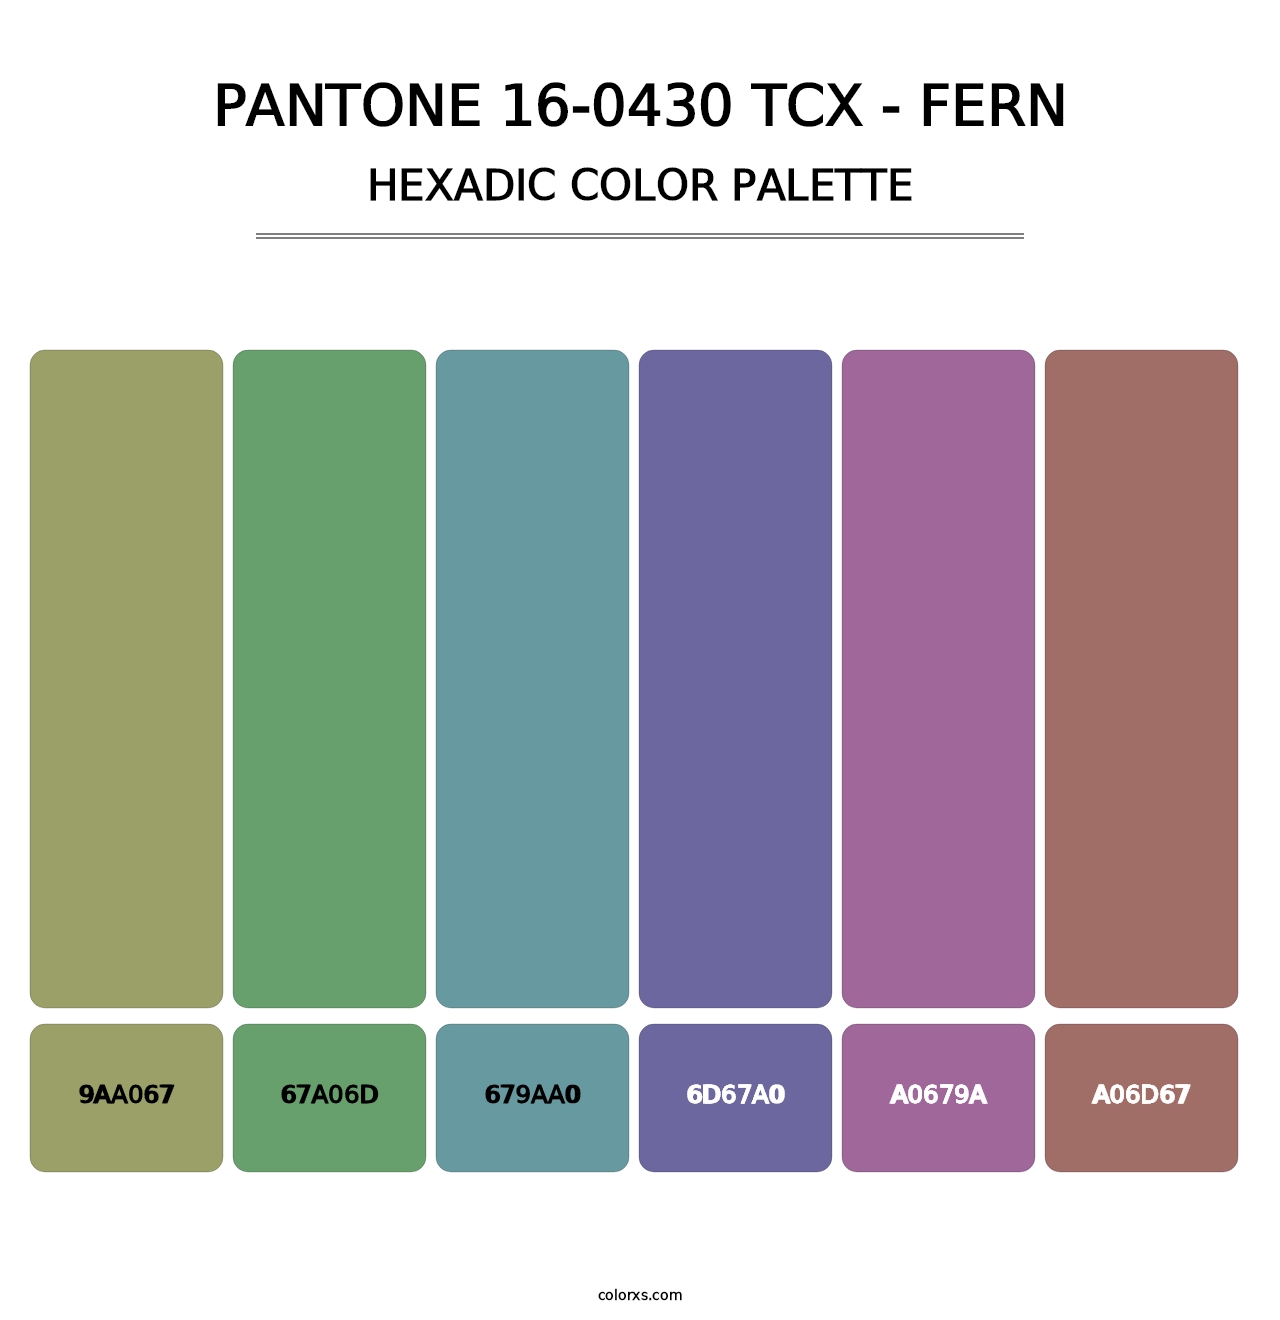 PANTONE 16-0430 TCX - Fern - Hexadic Color Palette